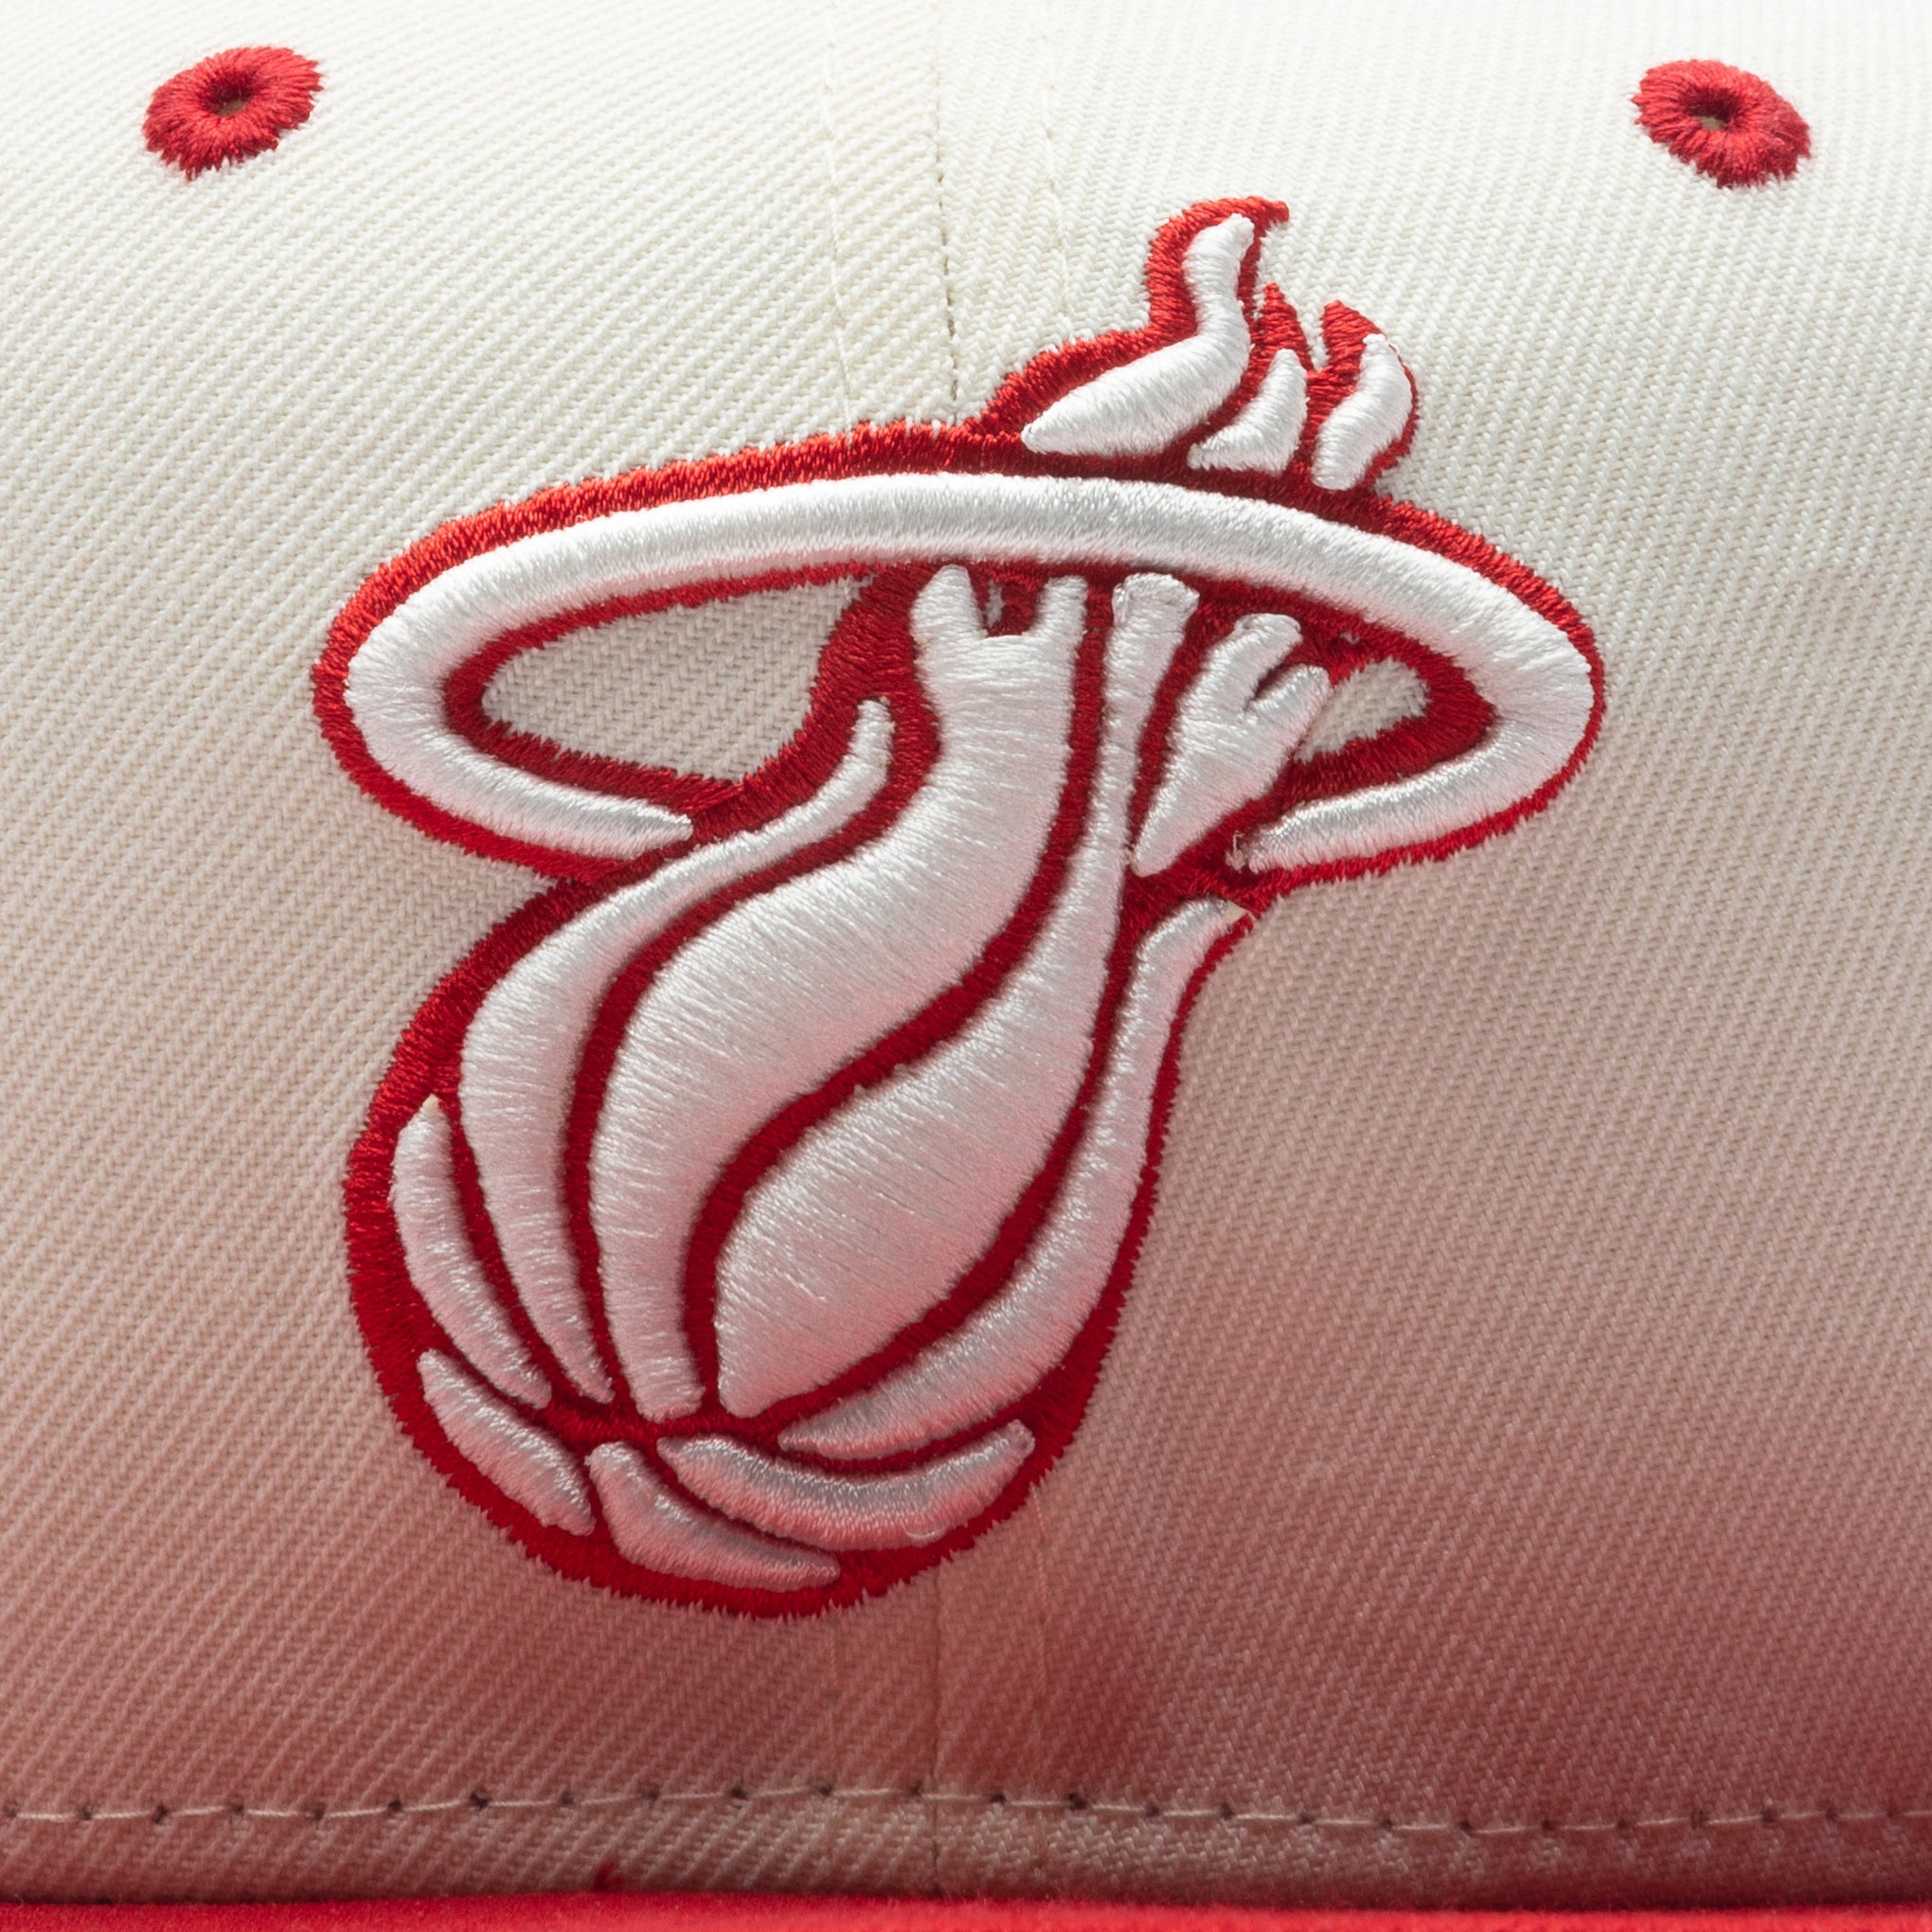 Feature x New Era NBA 9FIFTY Snapback - Miami Heat